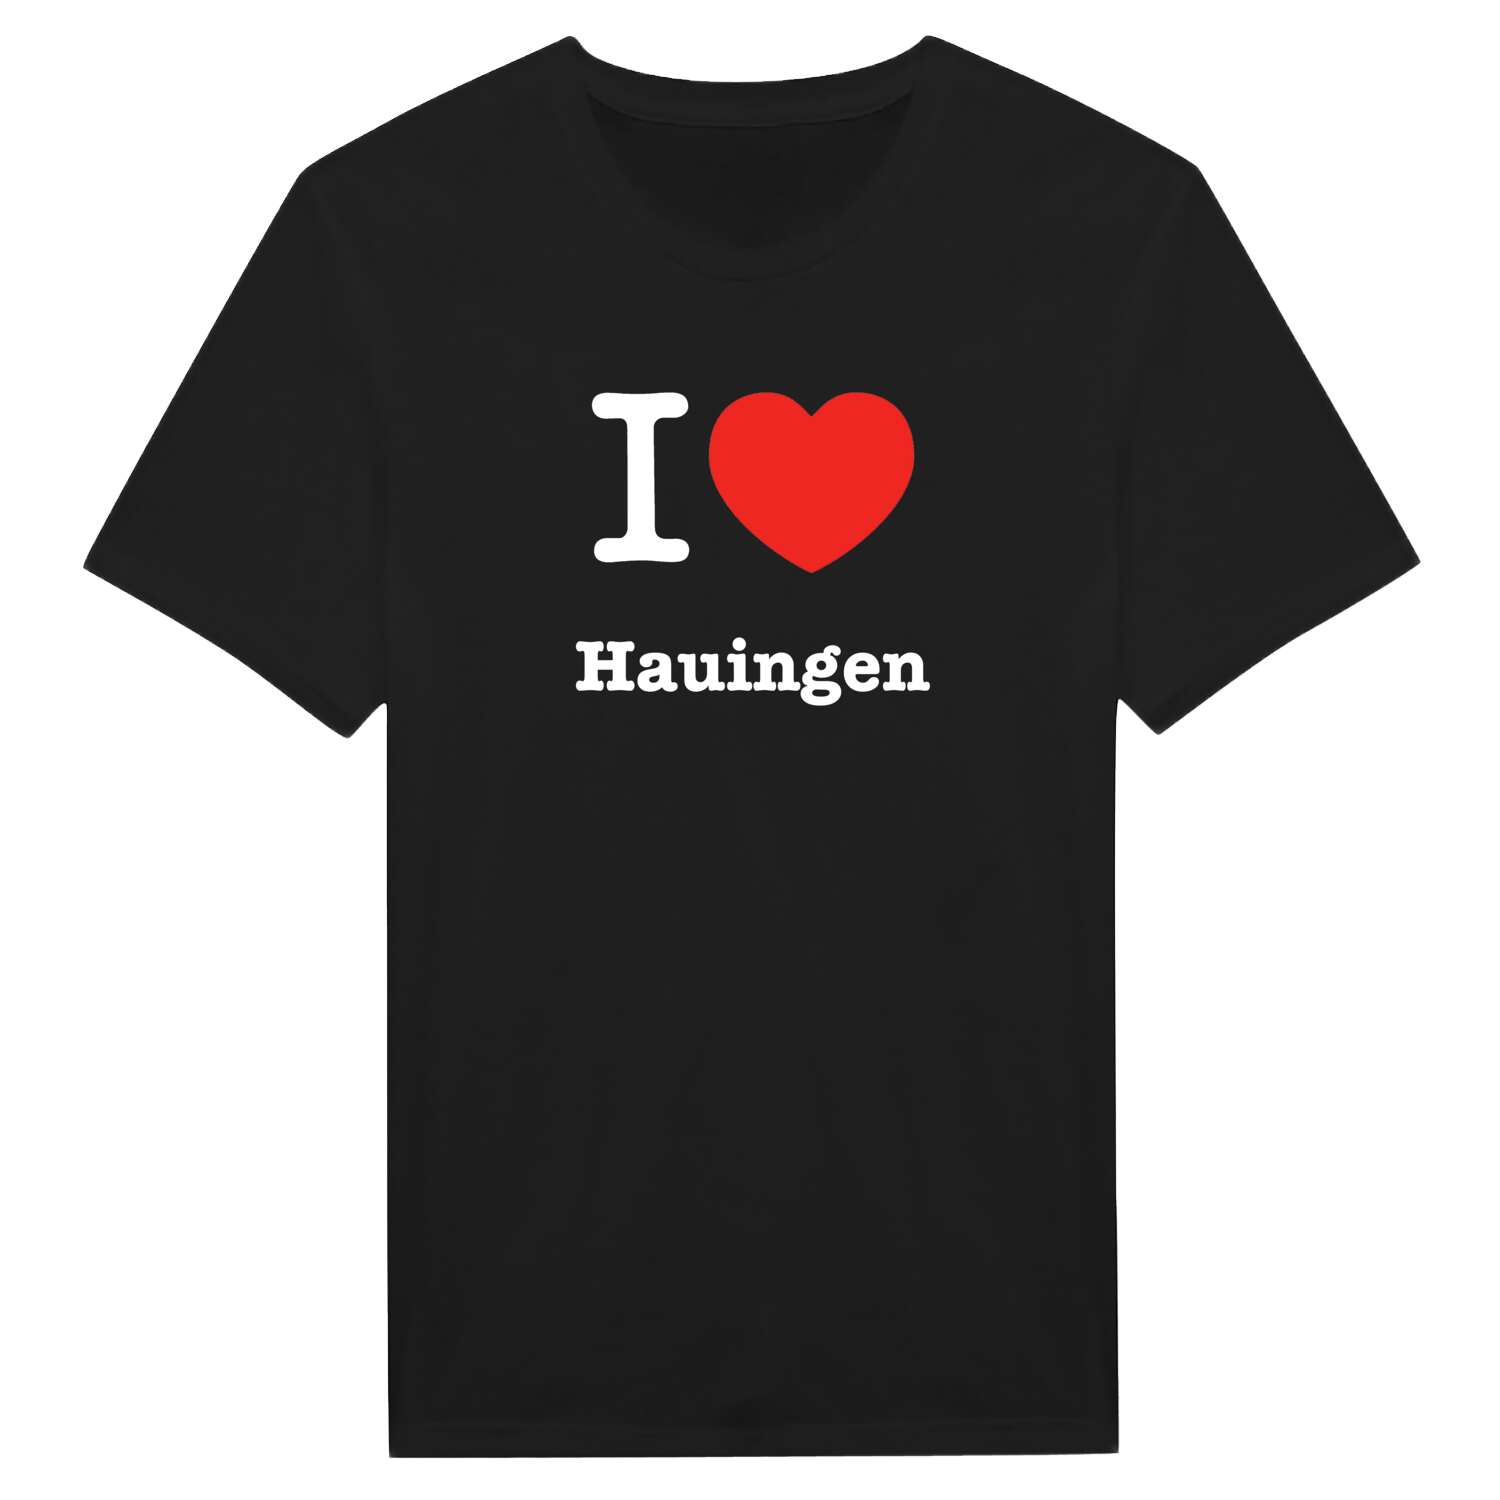 Hauingen T-Shirt »I love«